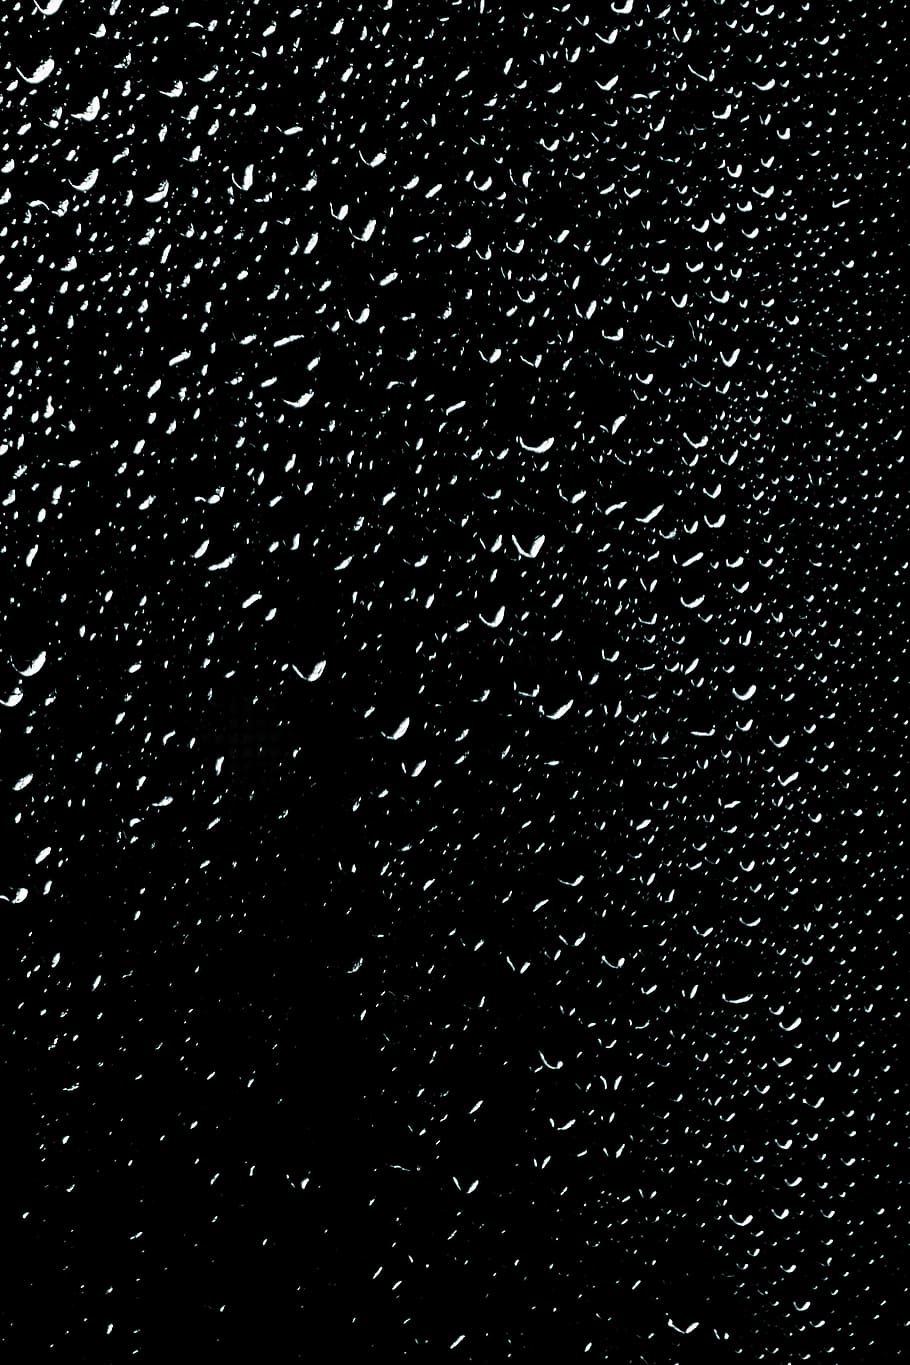 rain, raindrop, drop of water, drip, water, wet, surface, texture, structure, background